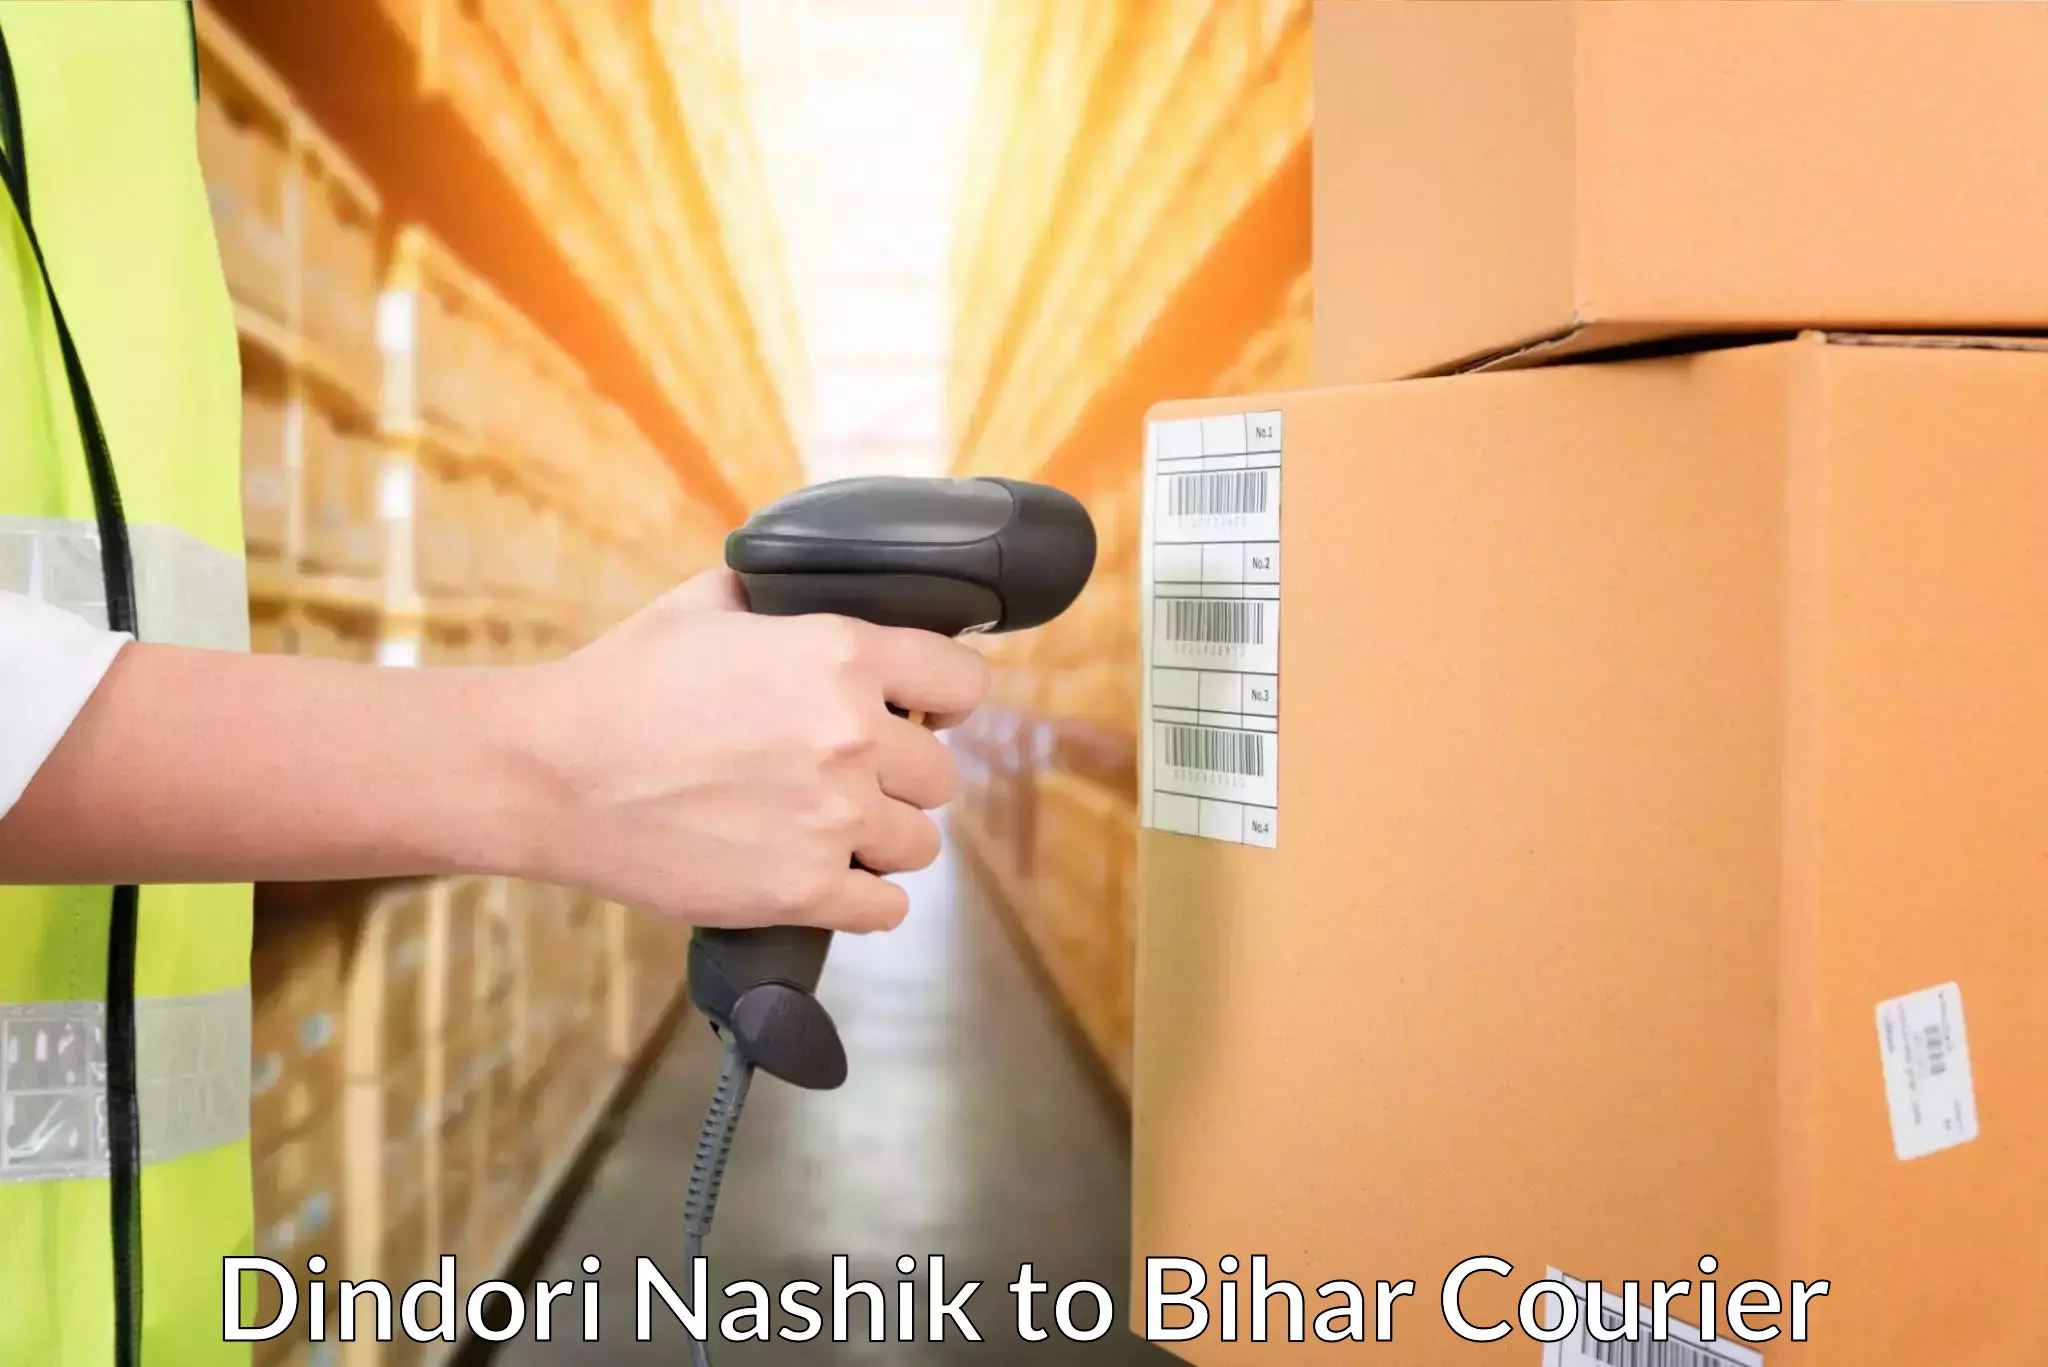 Package delivery network Dindori Nashik to Bihar